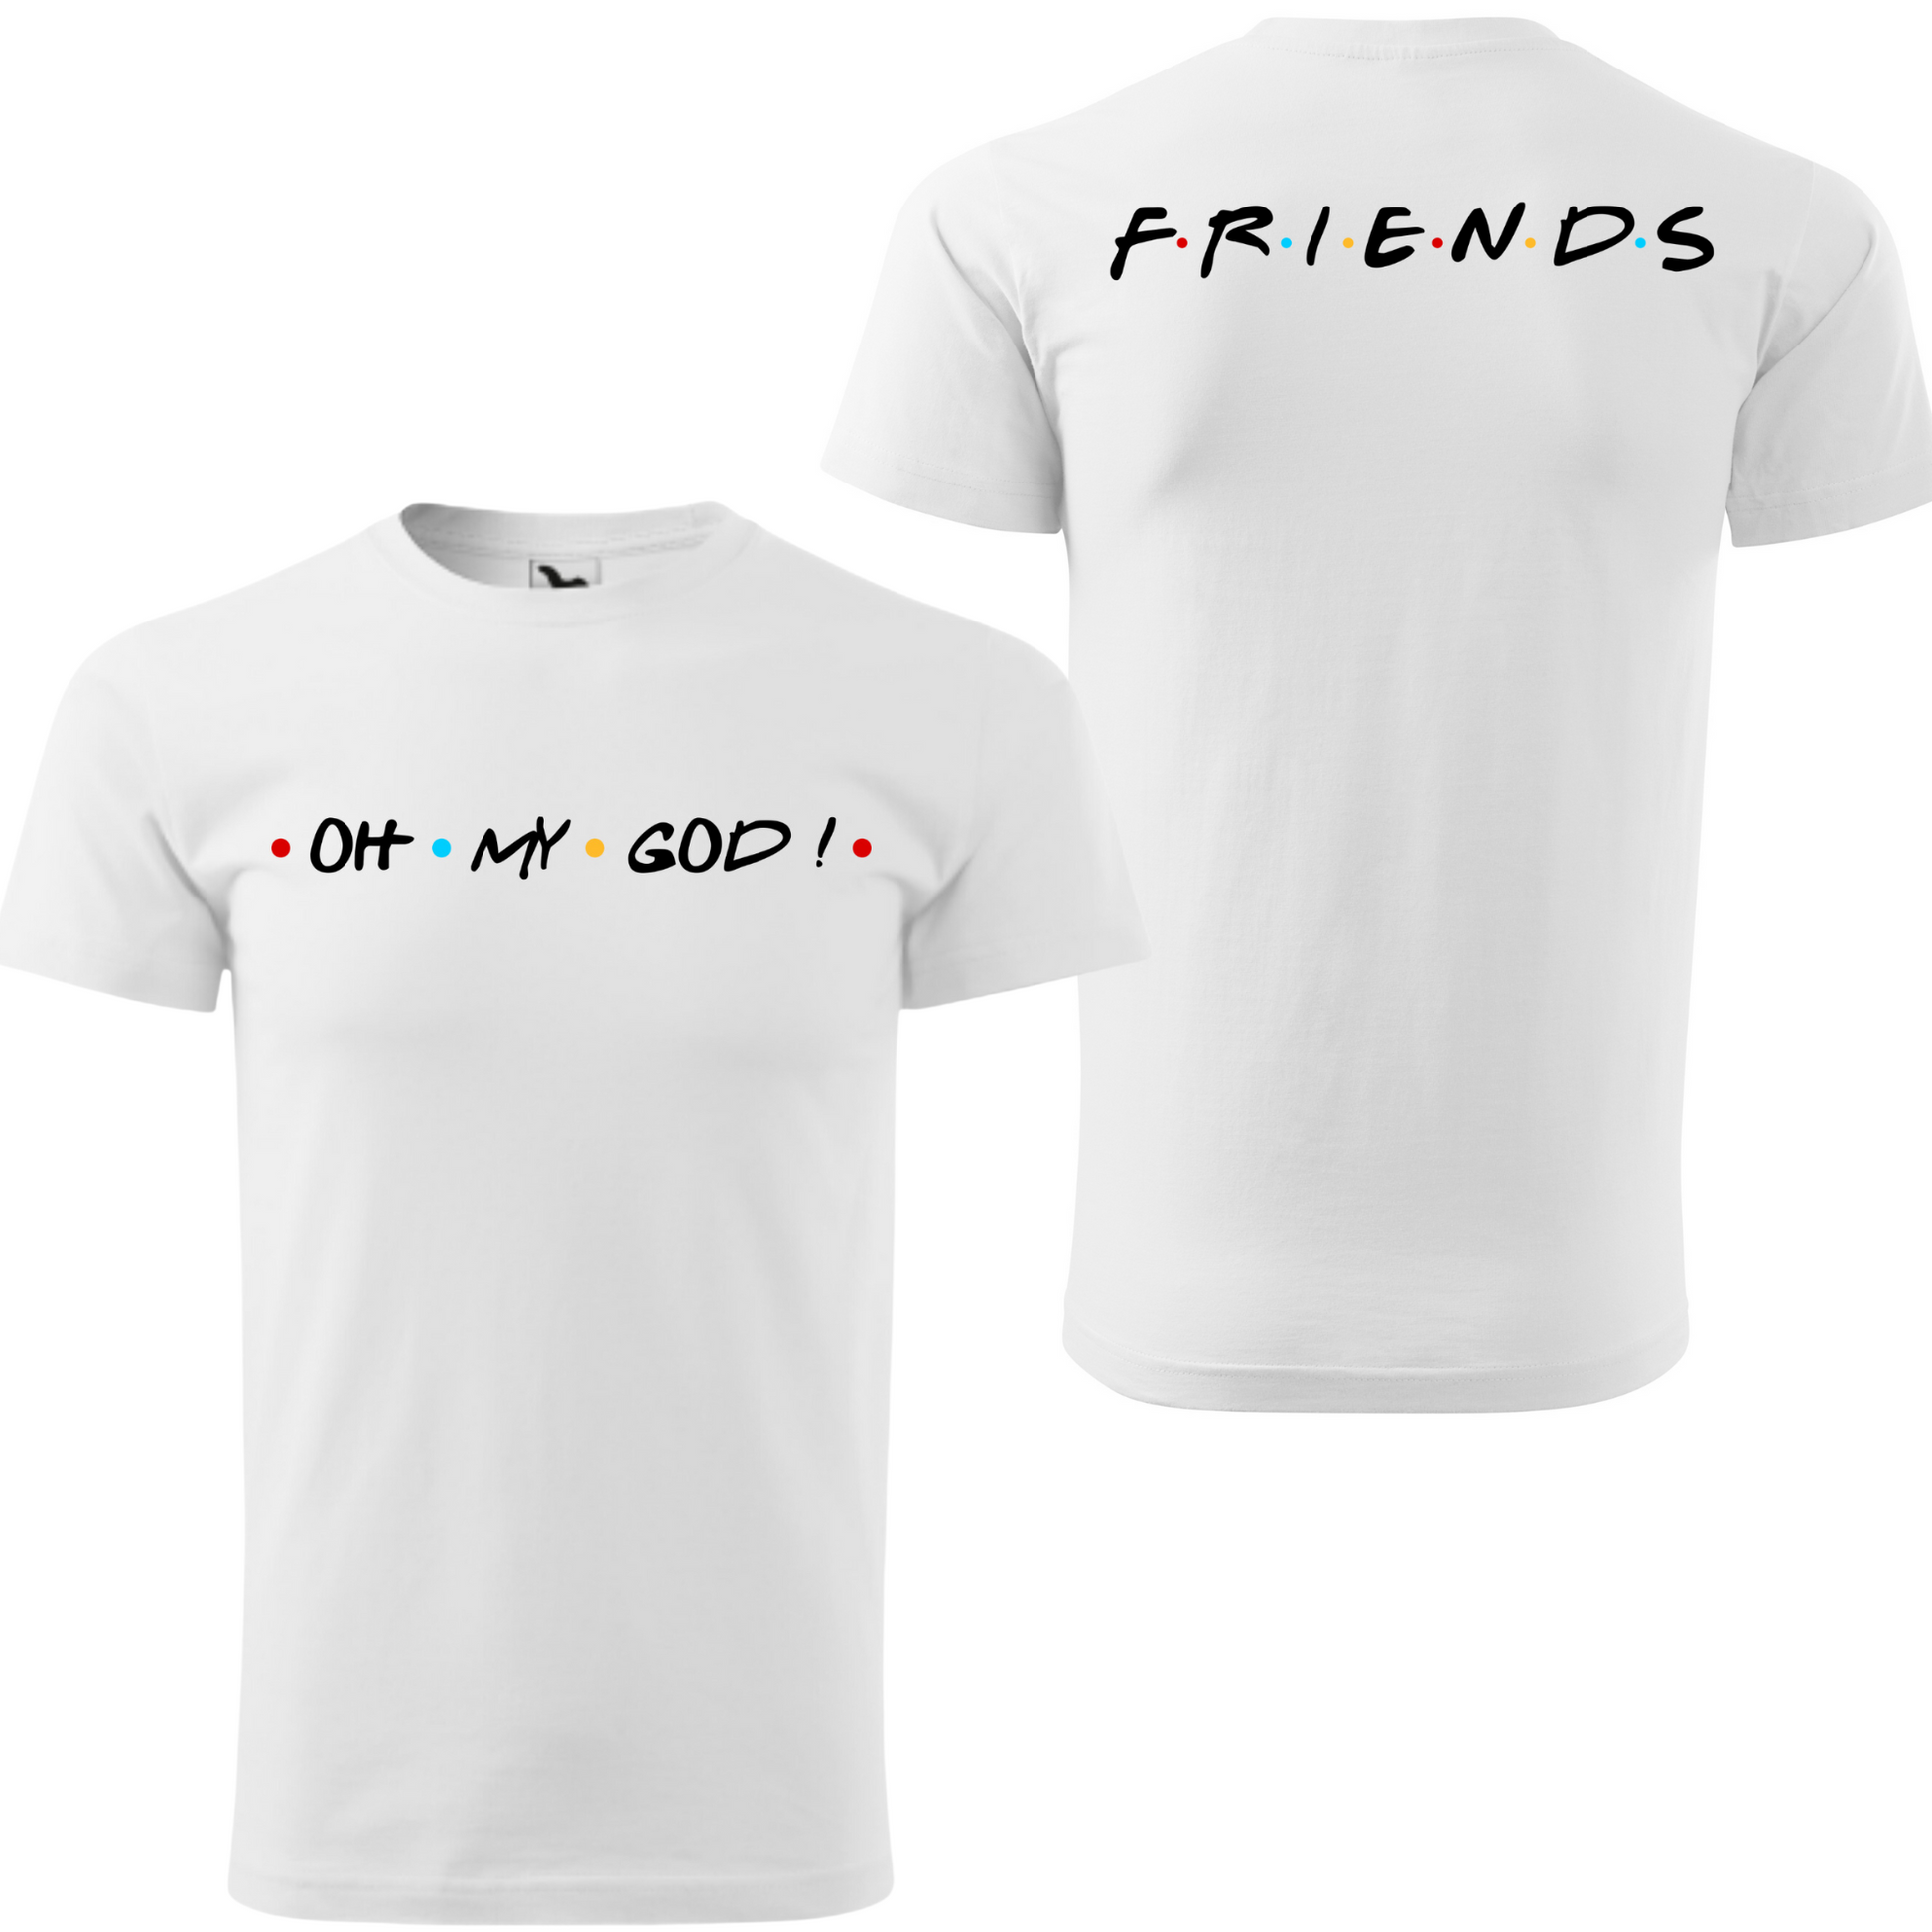 Tricoul cu expresia iconică "Oh My God" din 'Friends'.